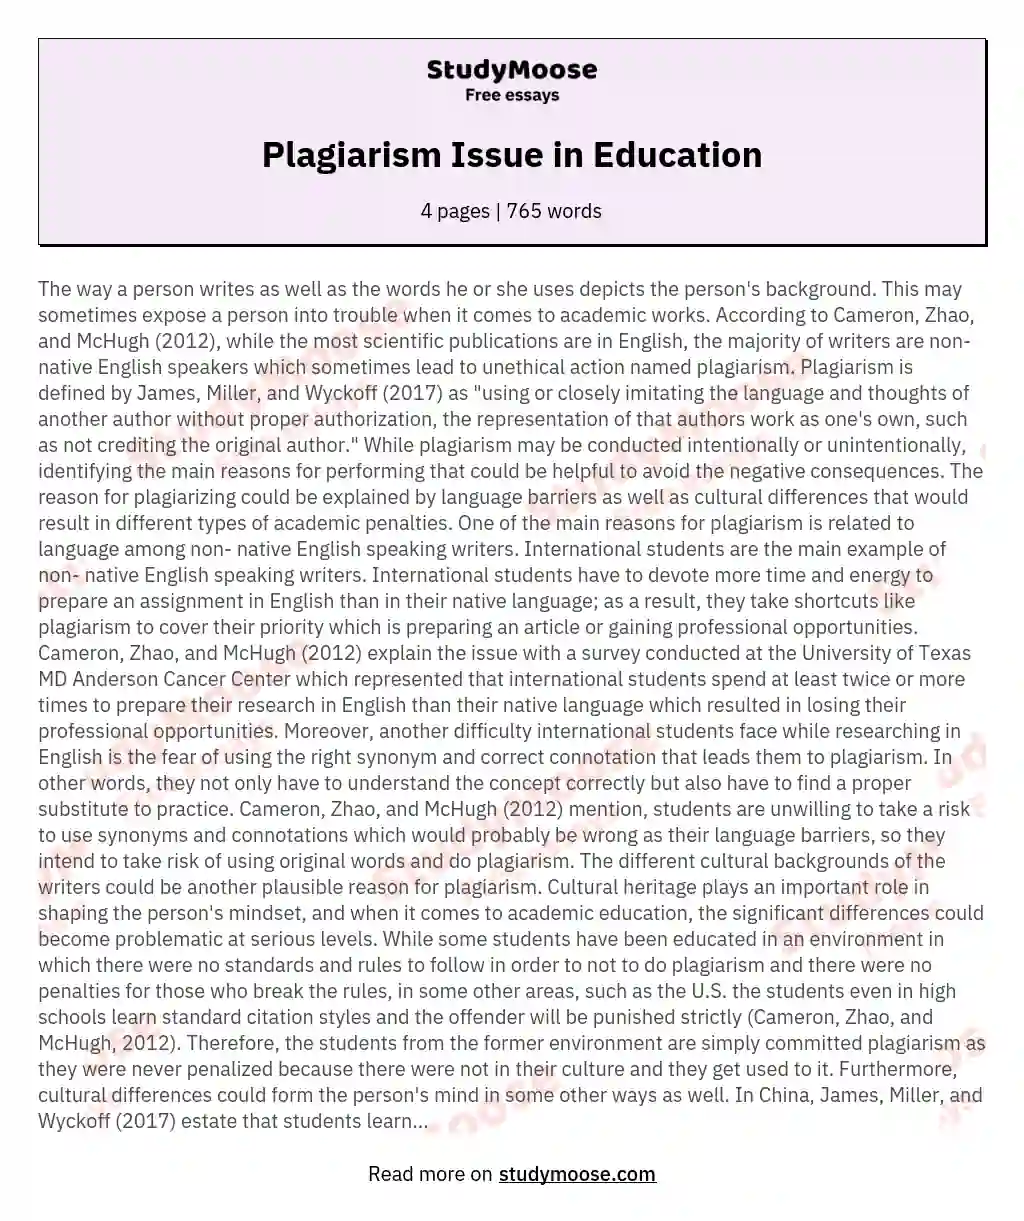 Plagiarism Issue in Education essay